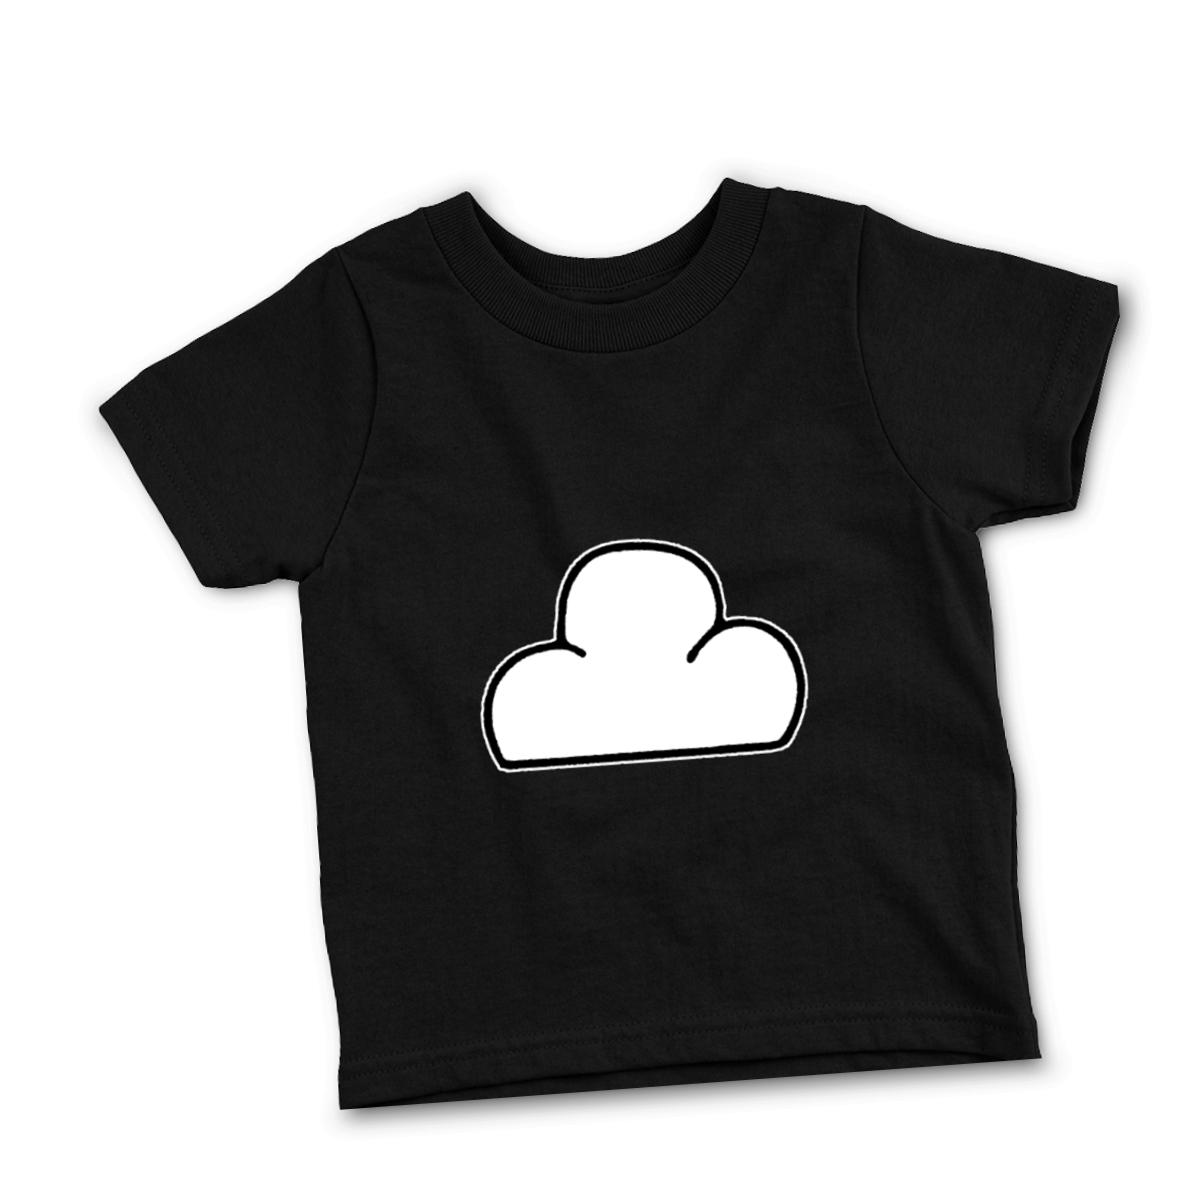 Cloud Toddler Tee 4T black